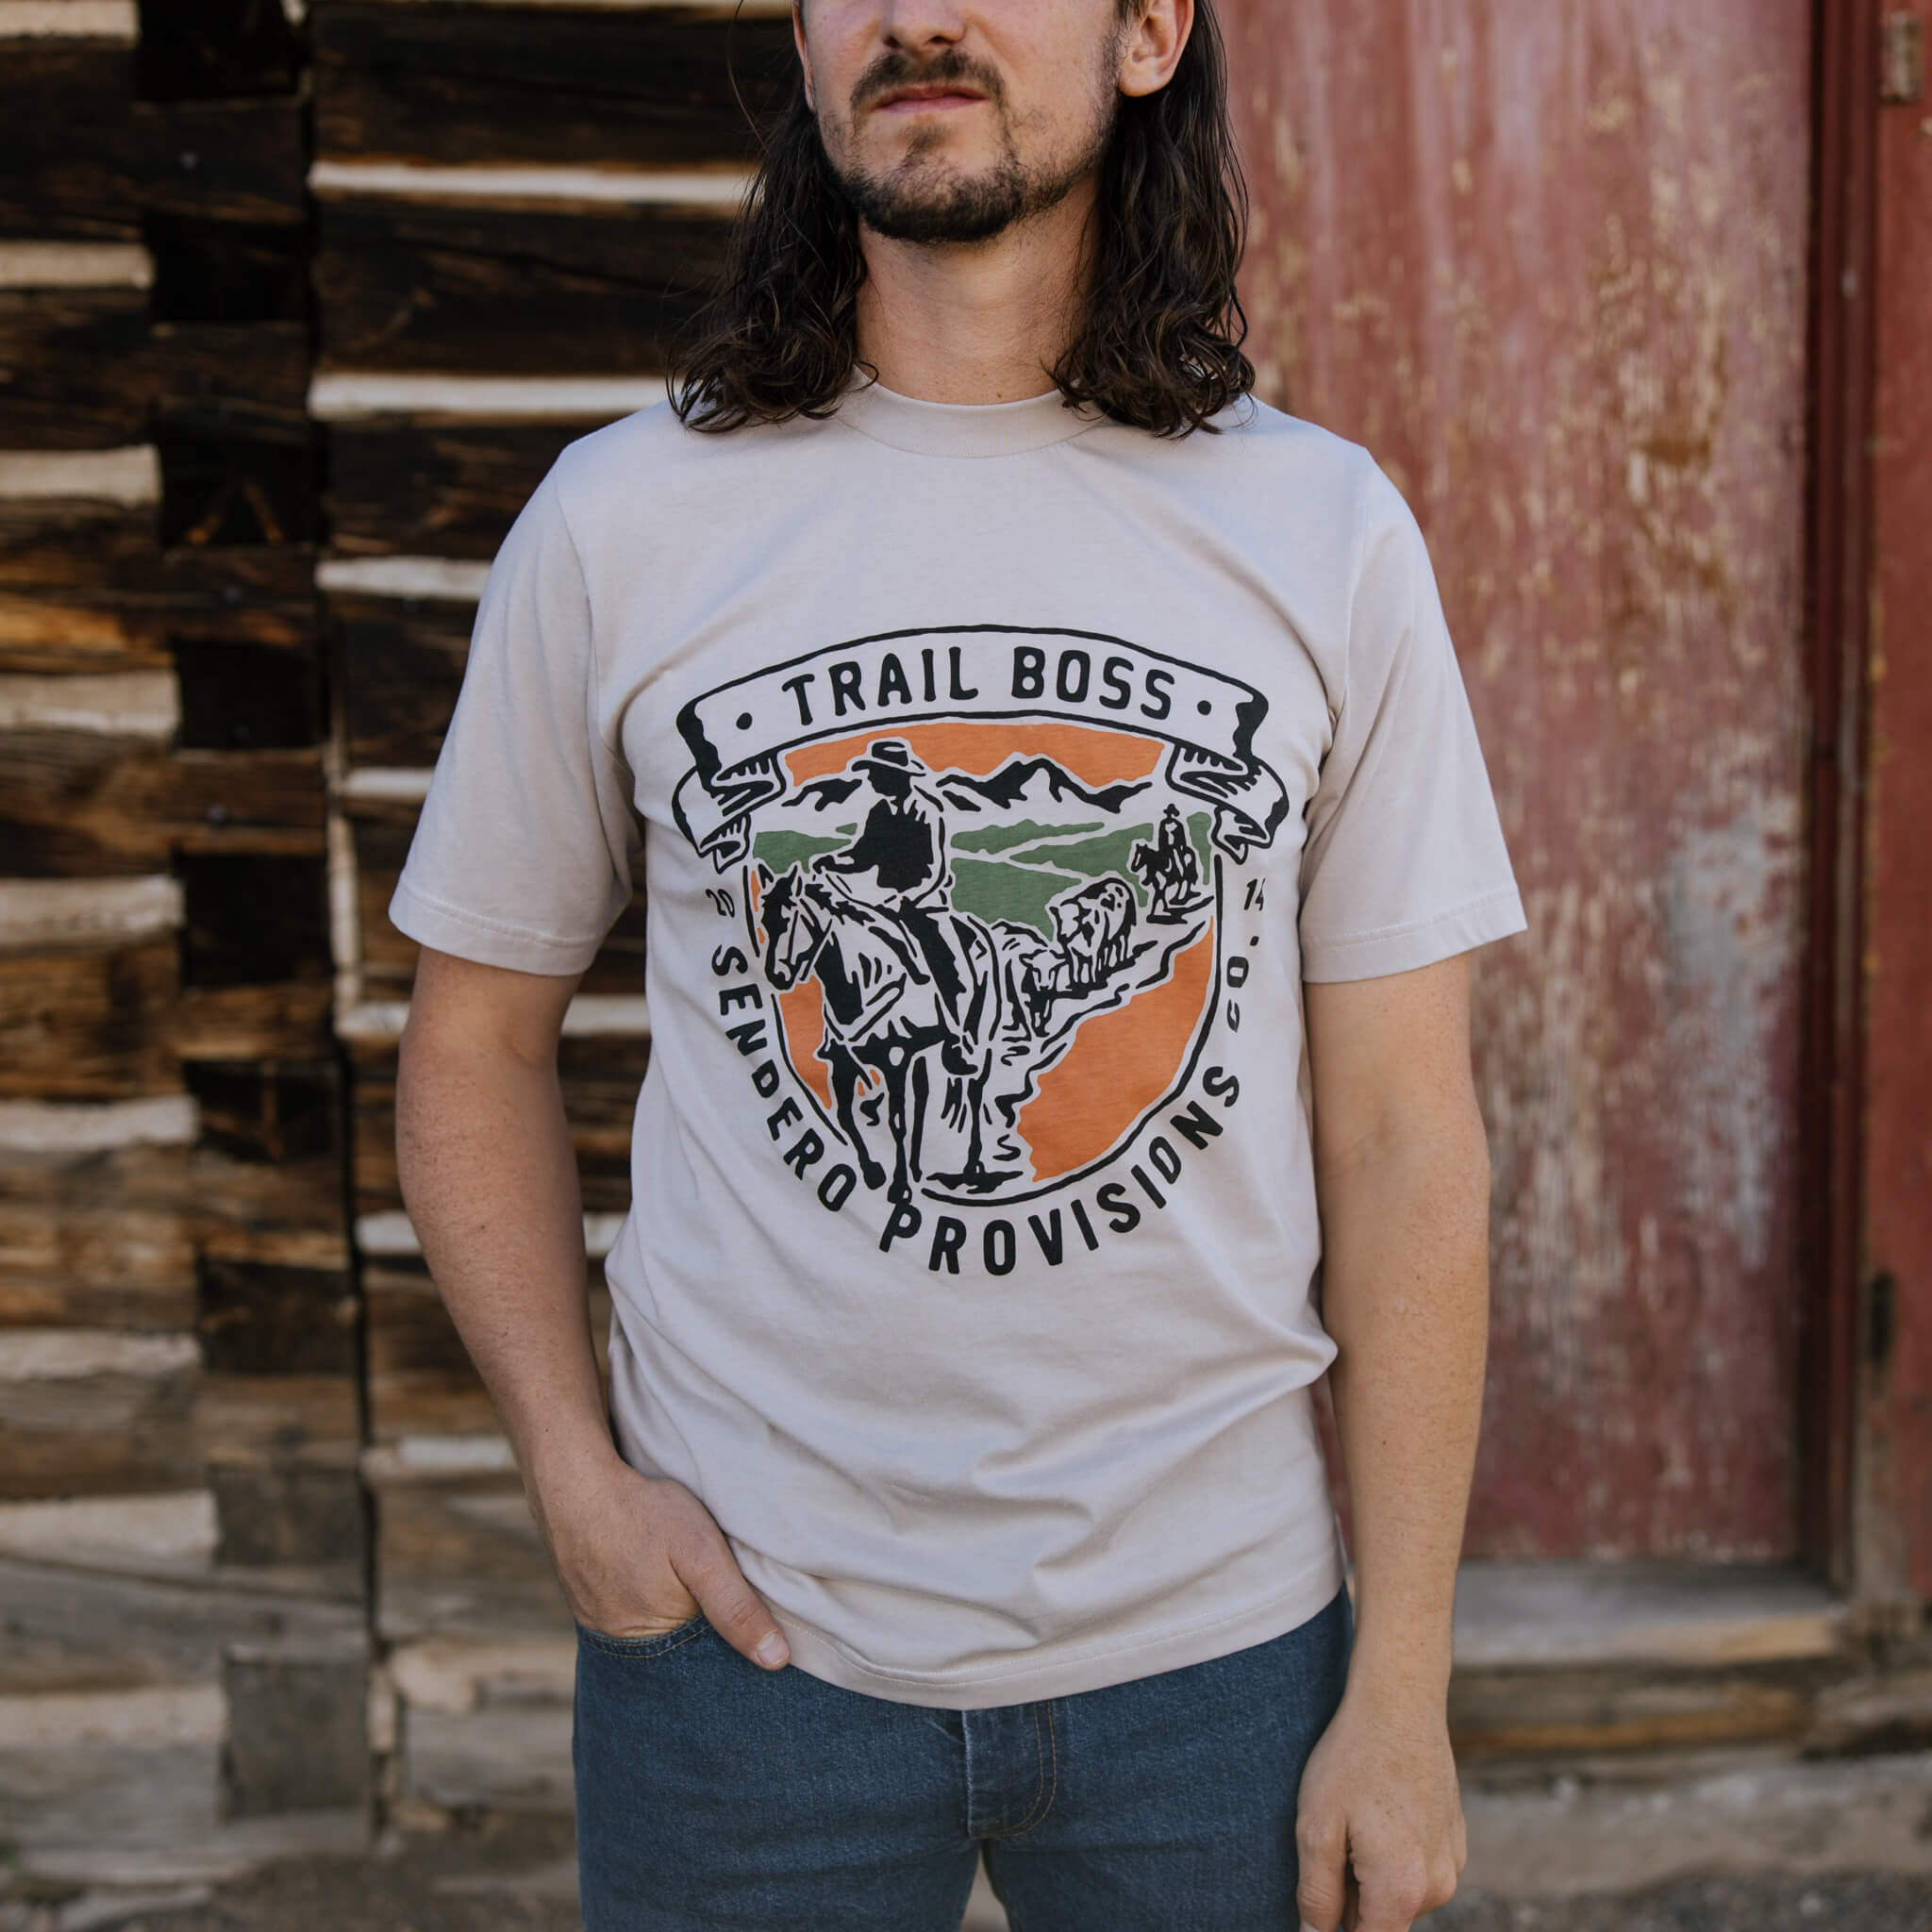 Trail Boss T-Shirt